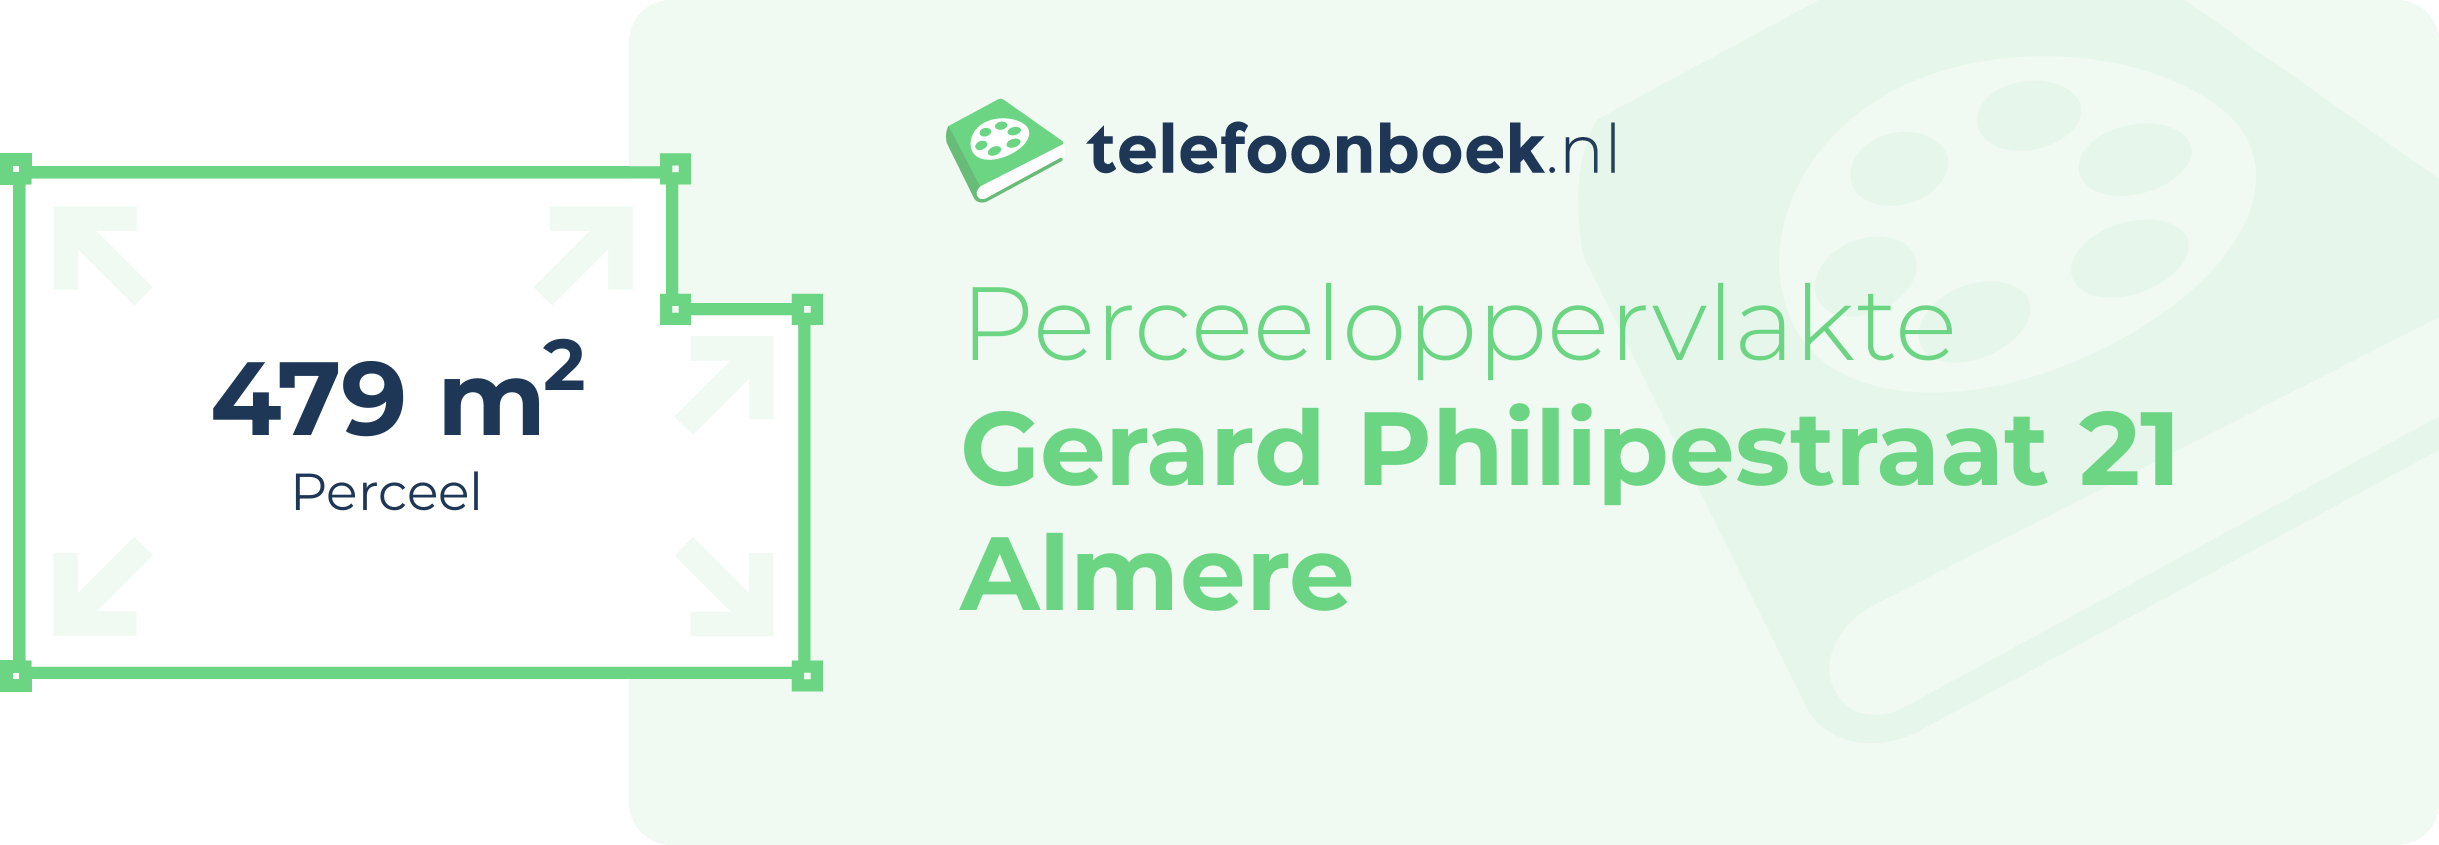 Perceeloppervlakte Gerard Philipestraat 21 Almere